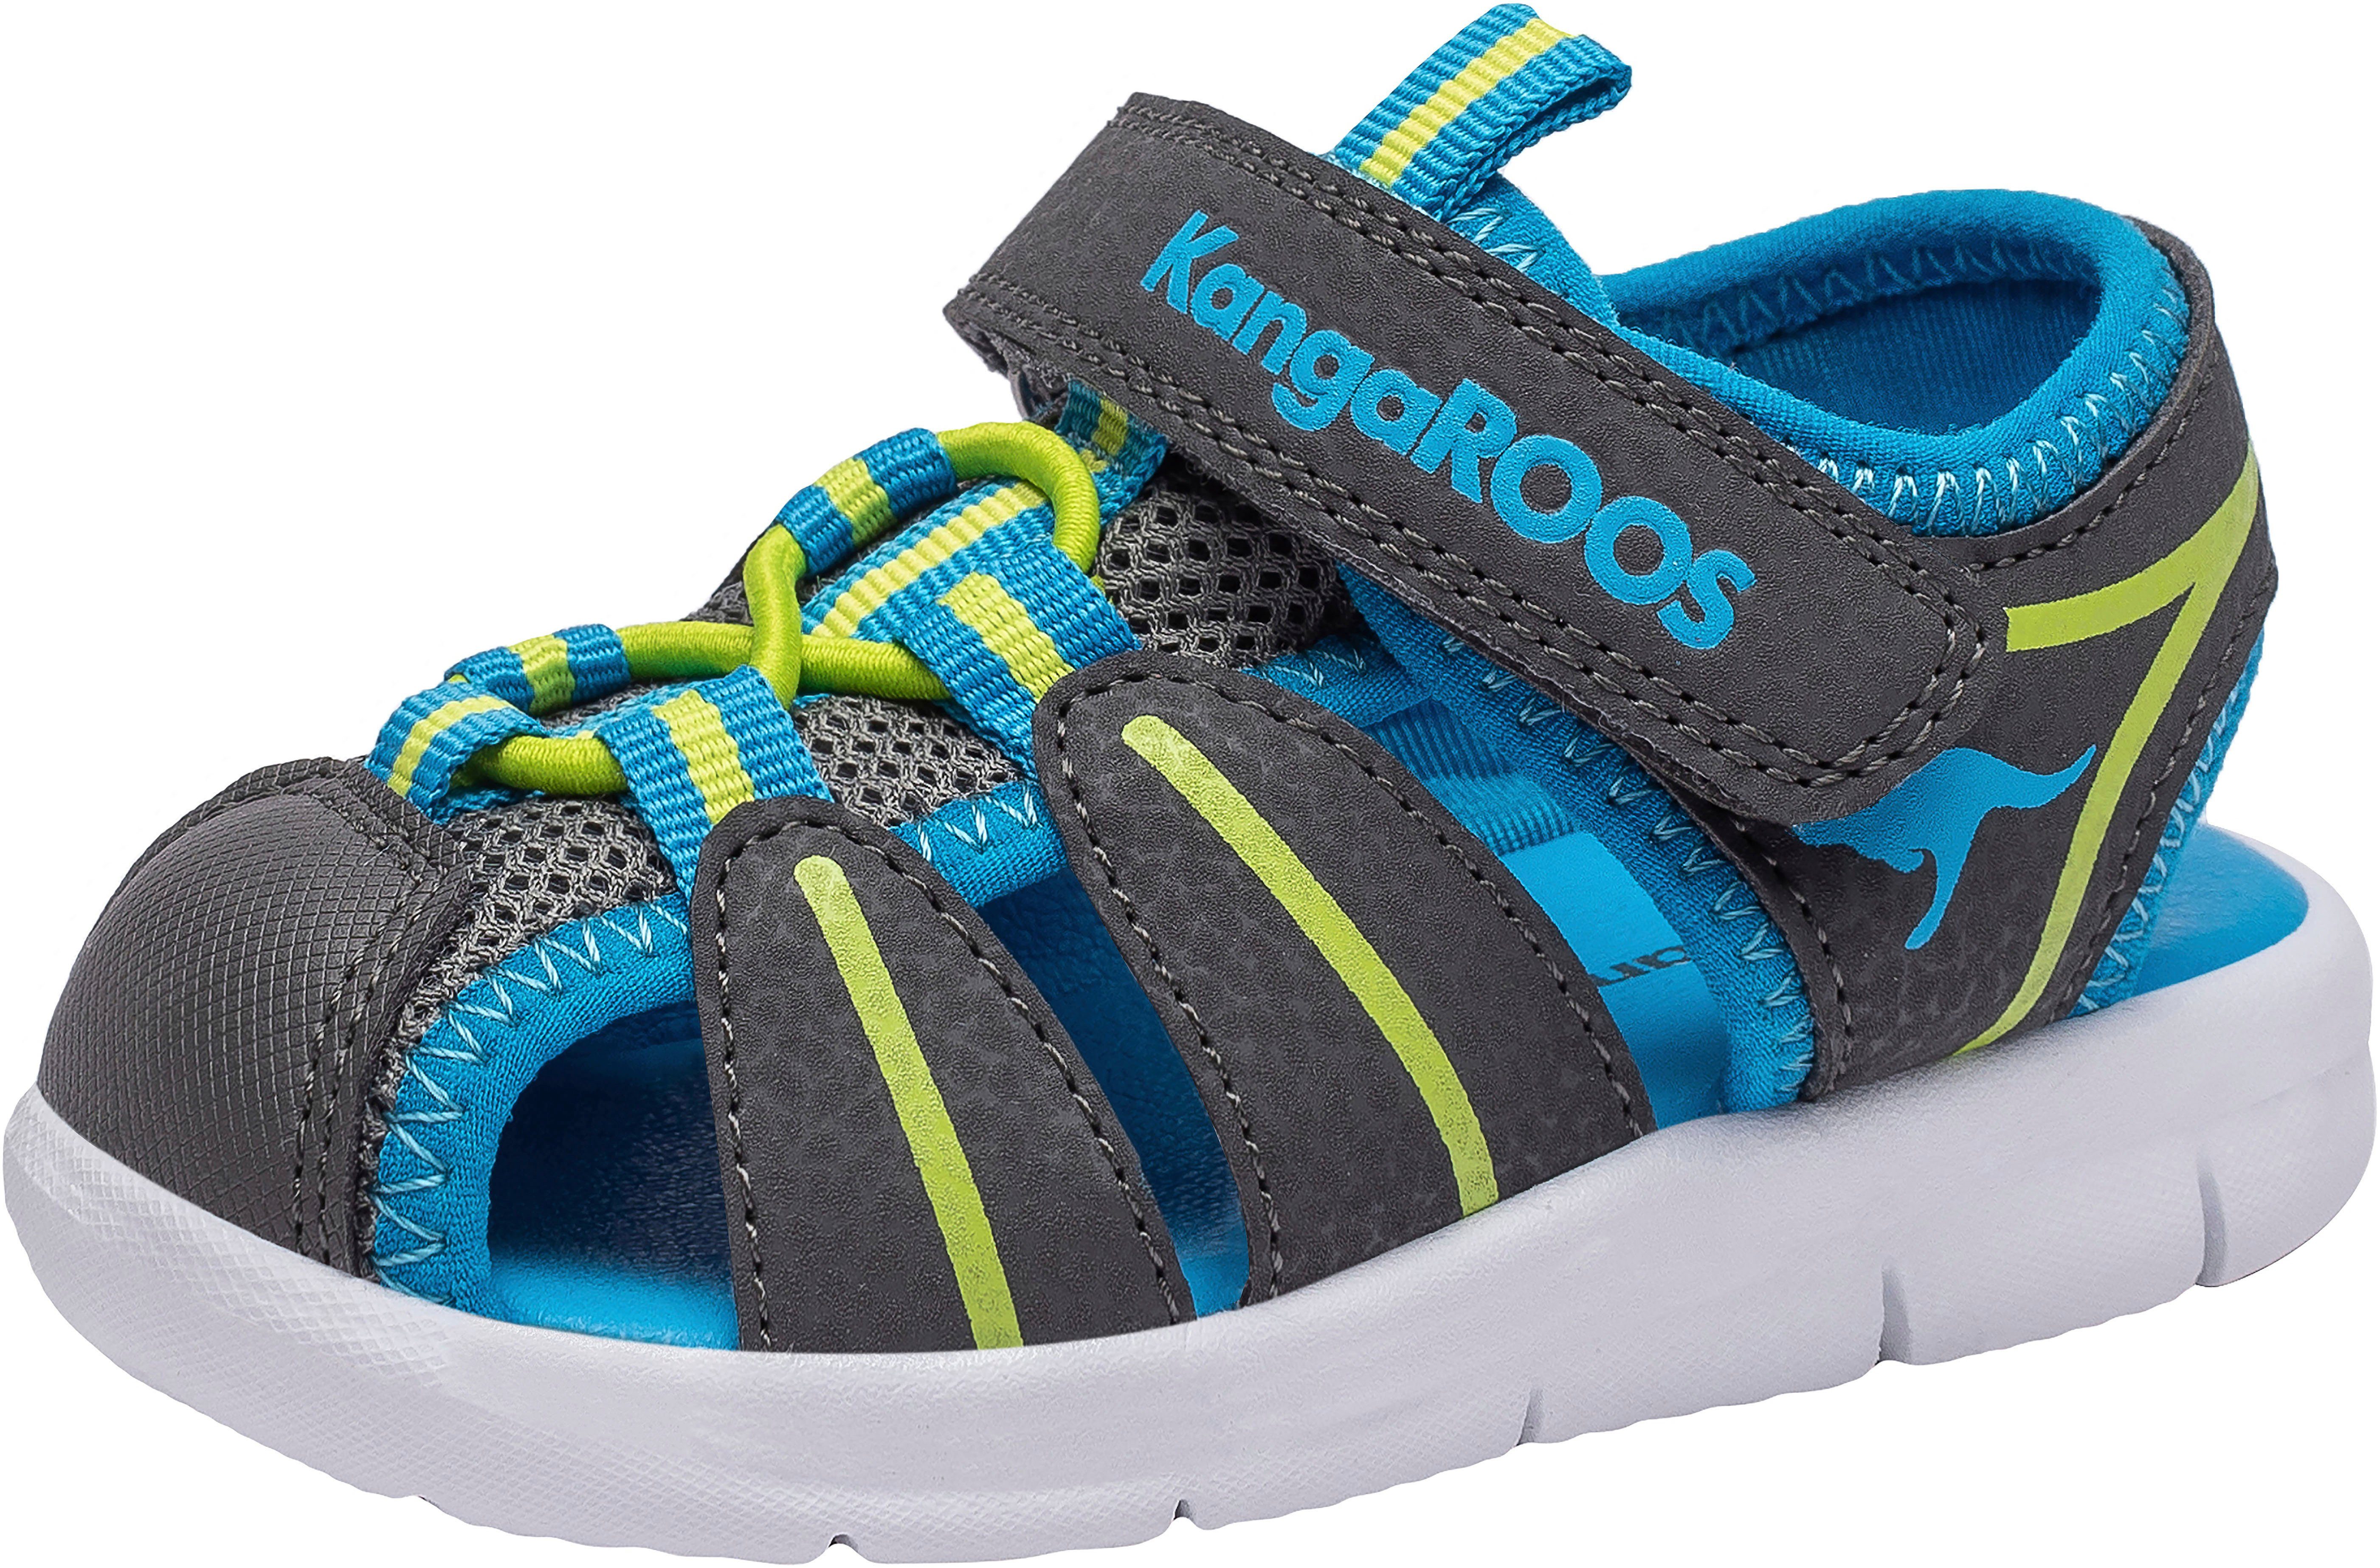 KangaROOS Sandale Klettverschluss K-Grobi mit